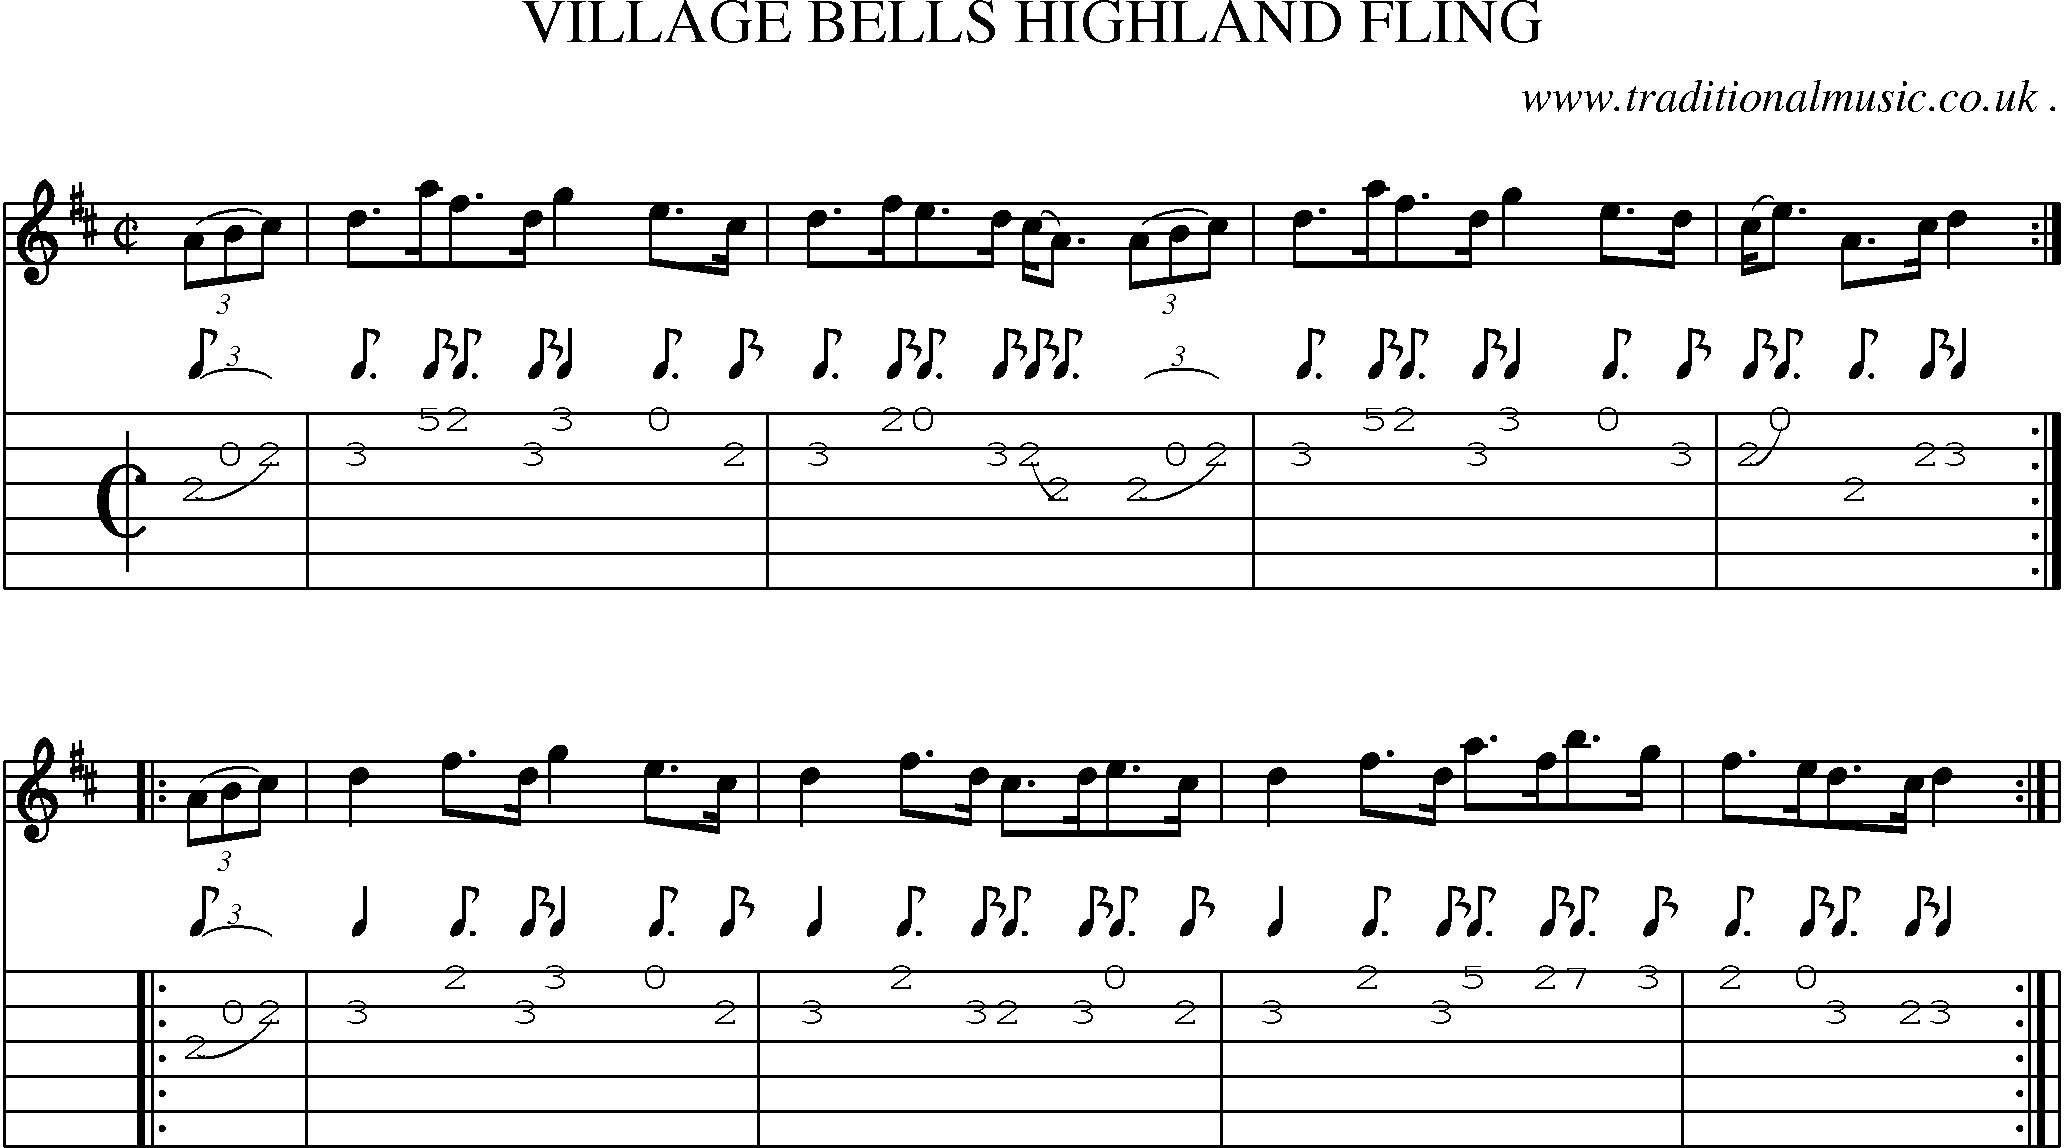 Sheet-Music and Guitar Tabs for Village Bells Highland Fling